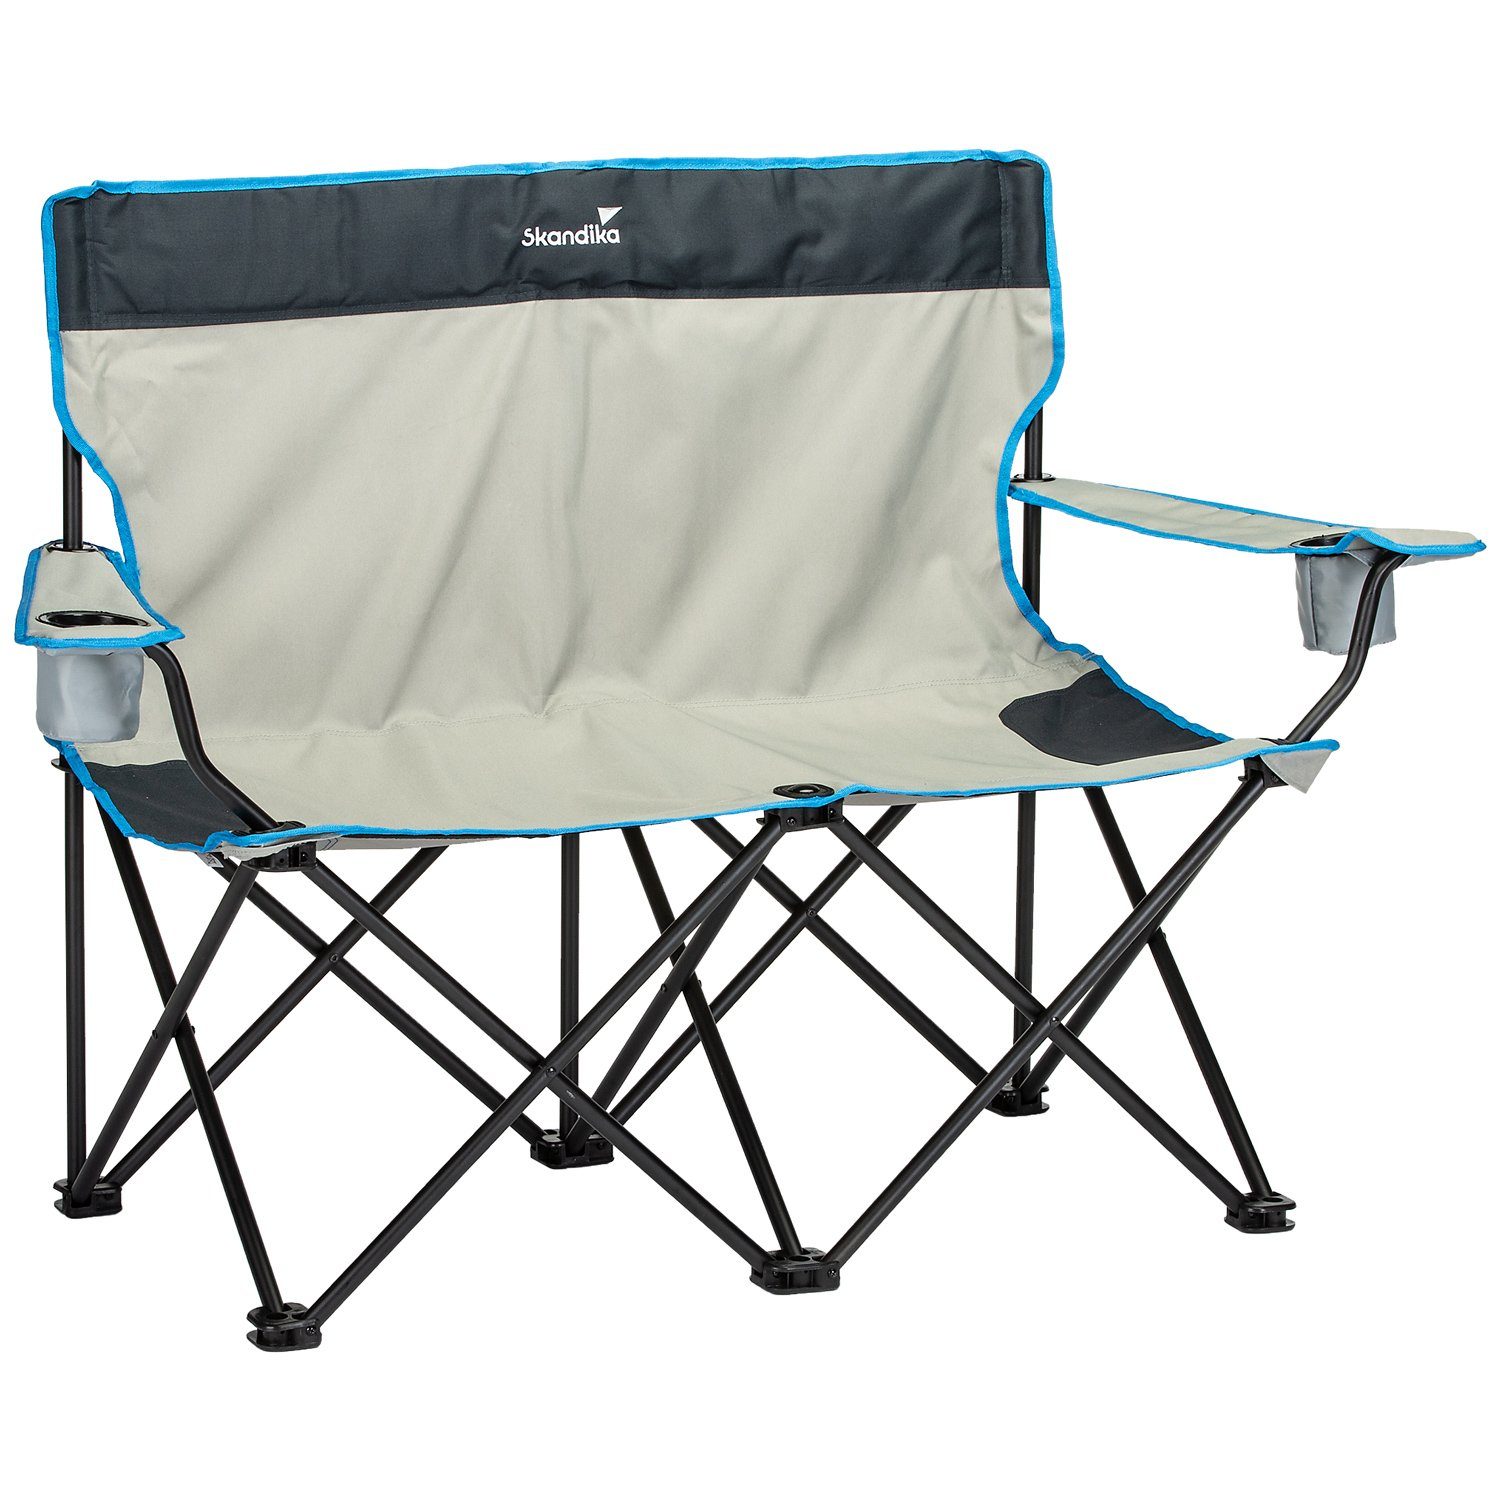 Skandika Campingstuhl Double Folding Chair, faltbar, Klappstuhl (2  integrierte Getränkehalter, Outdoor, Angeln, Festival, max. Belastung von  200Kg), für 2 Personen, XXL Campingbank